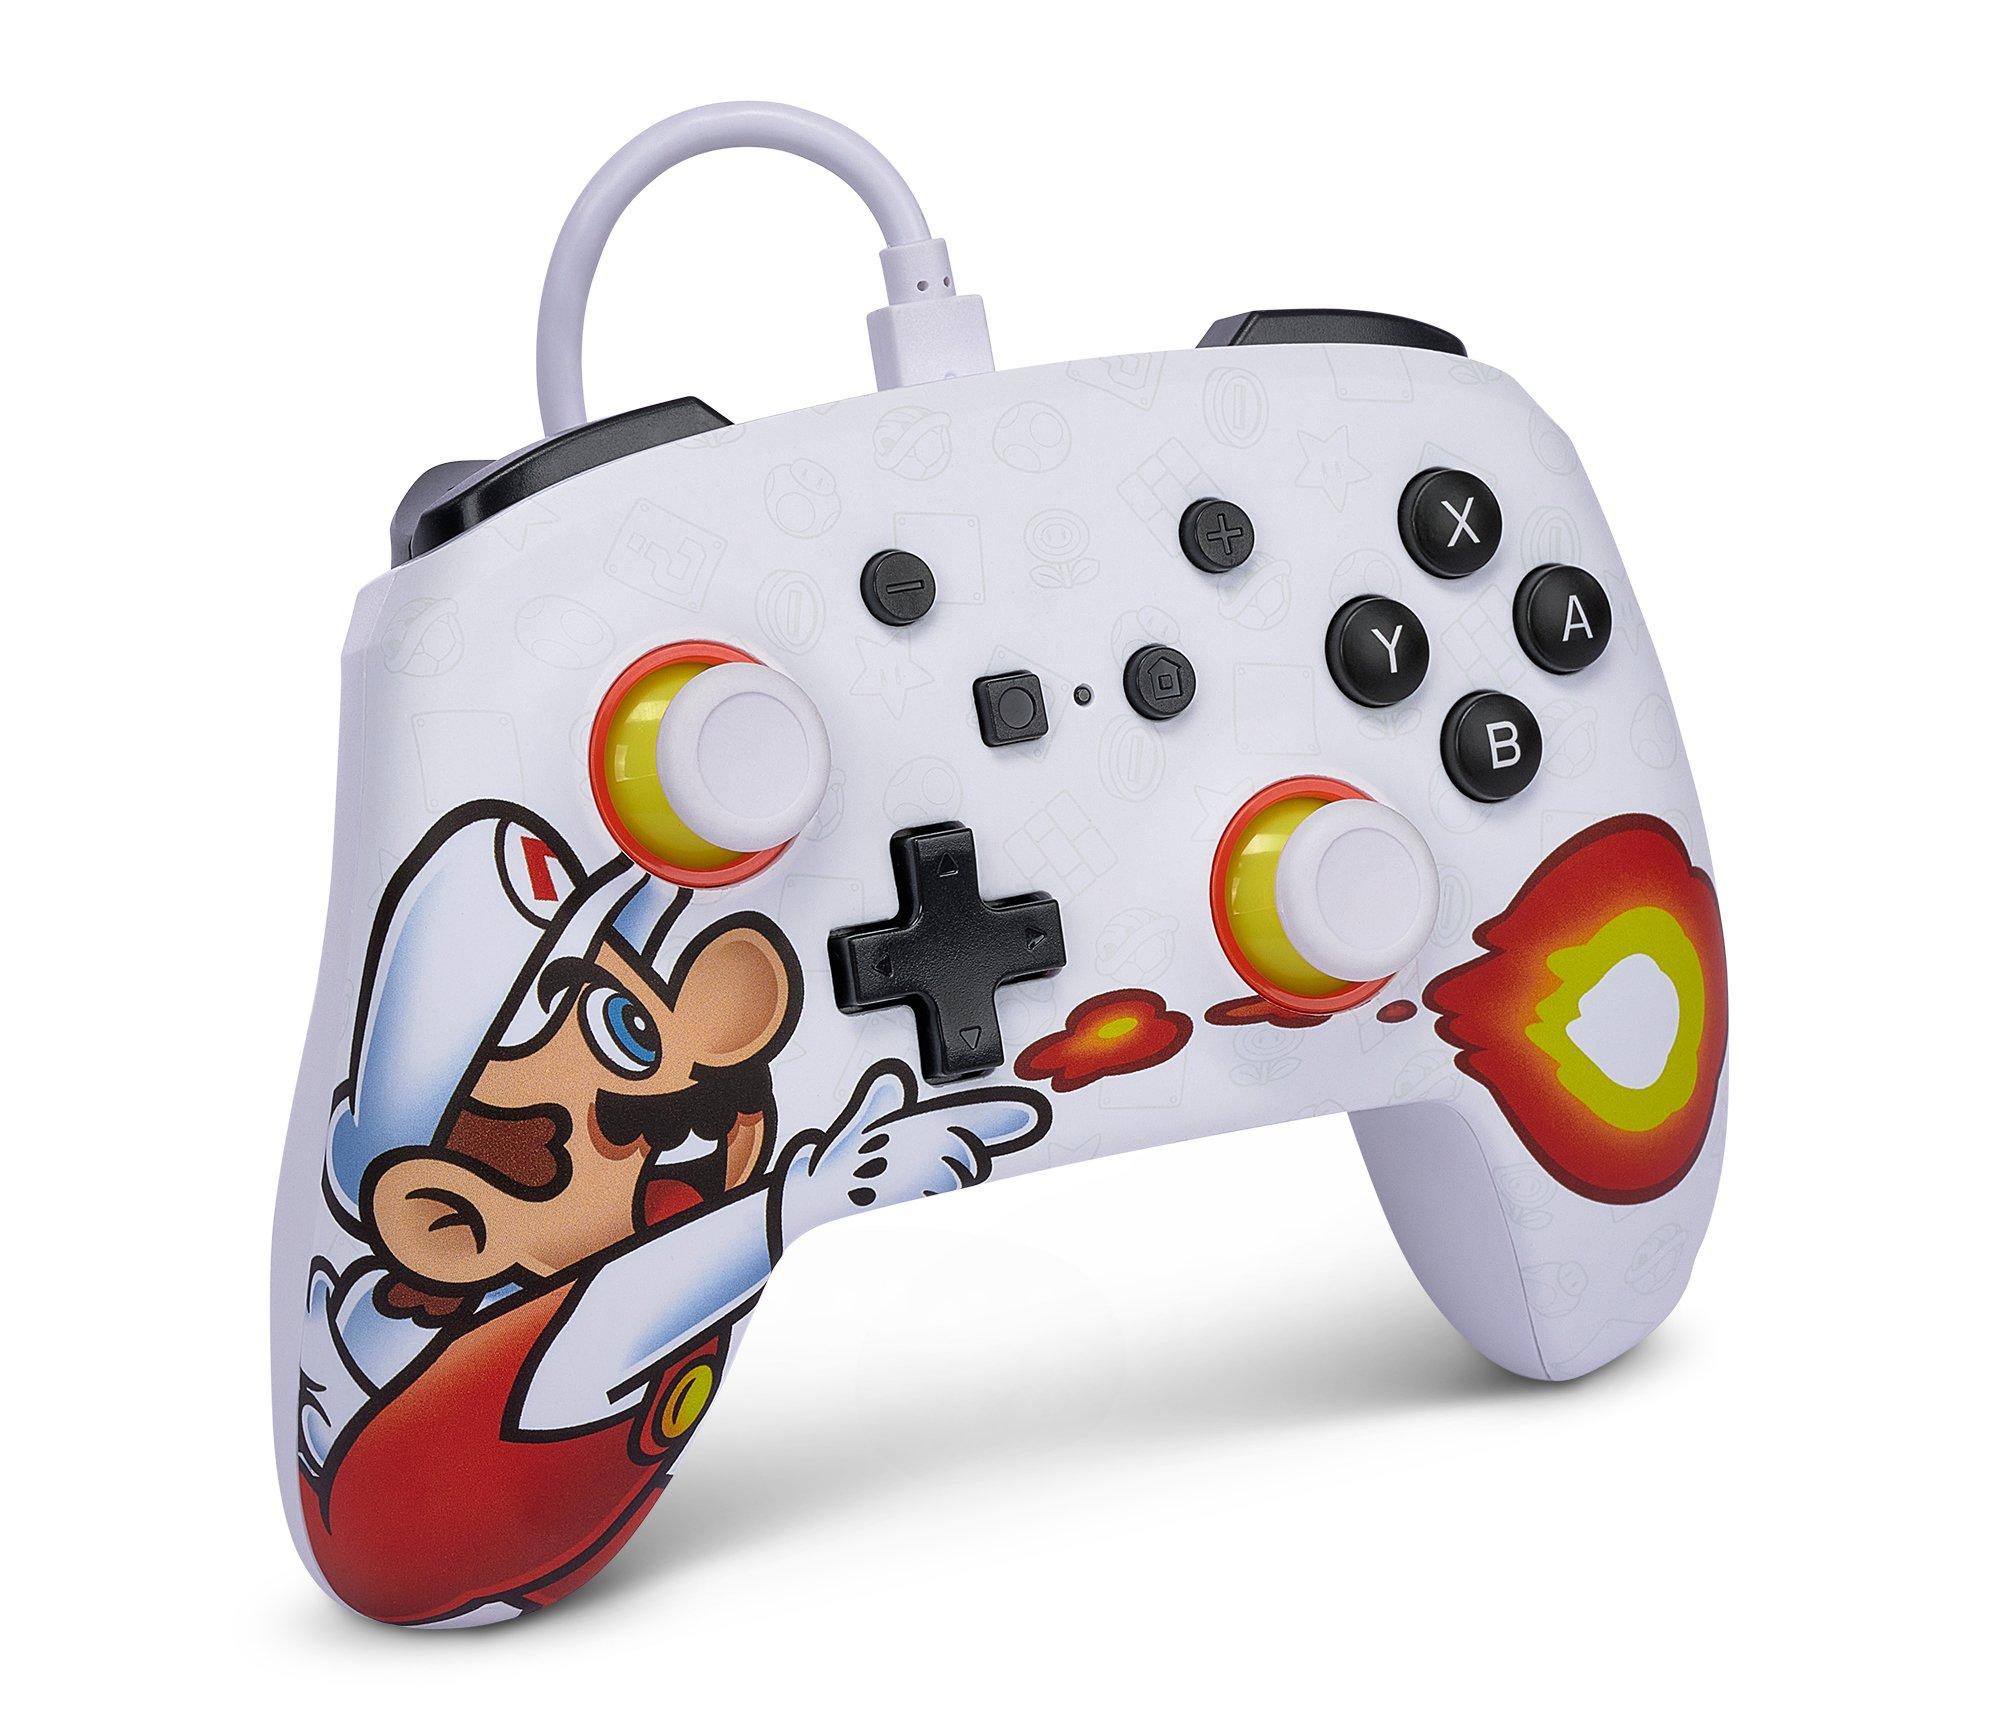 Manette filaire améliorée pour Nintendo Switch PowerA Fireball Mario